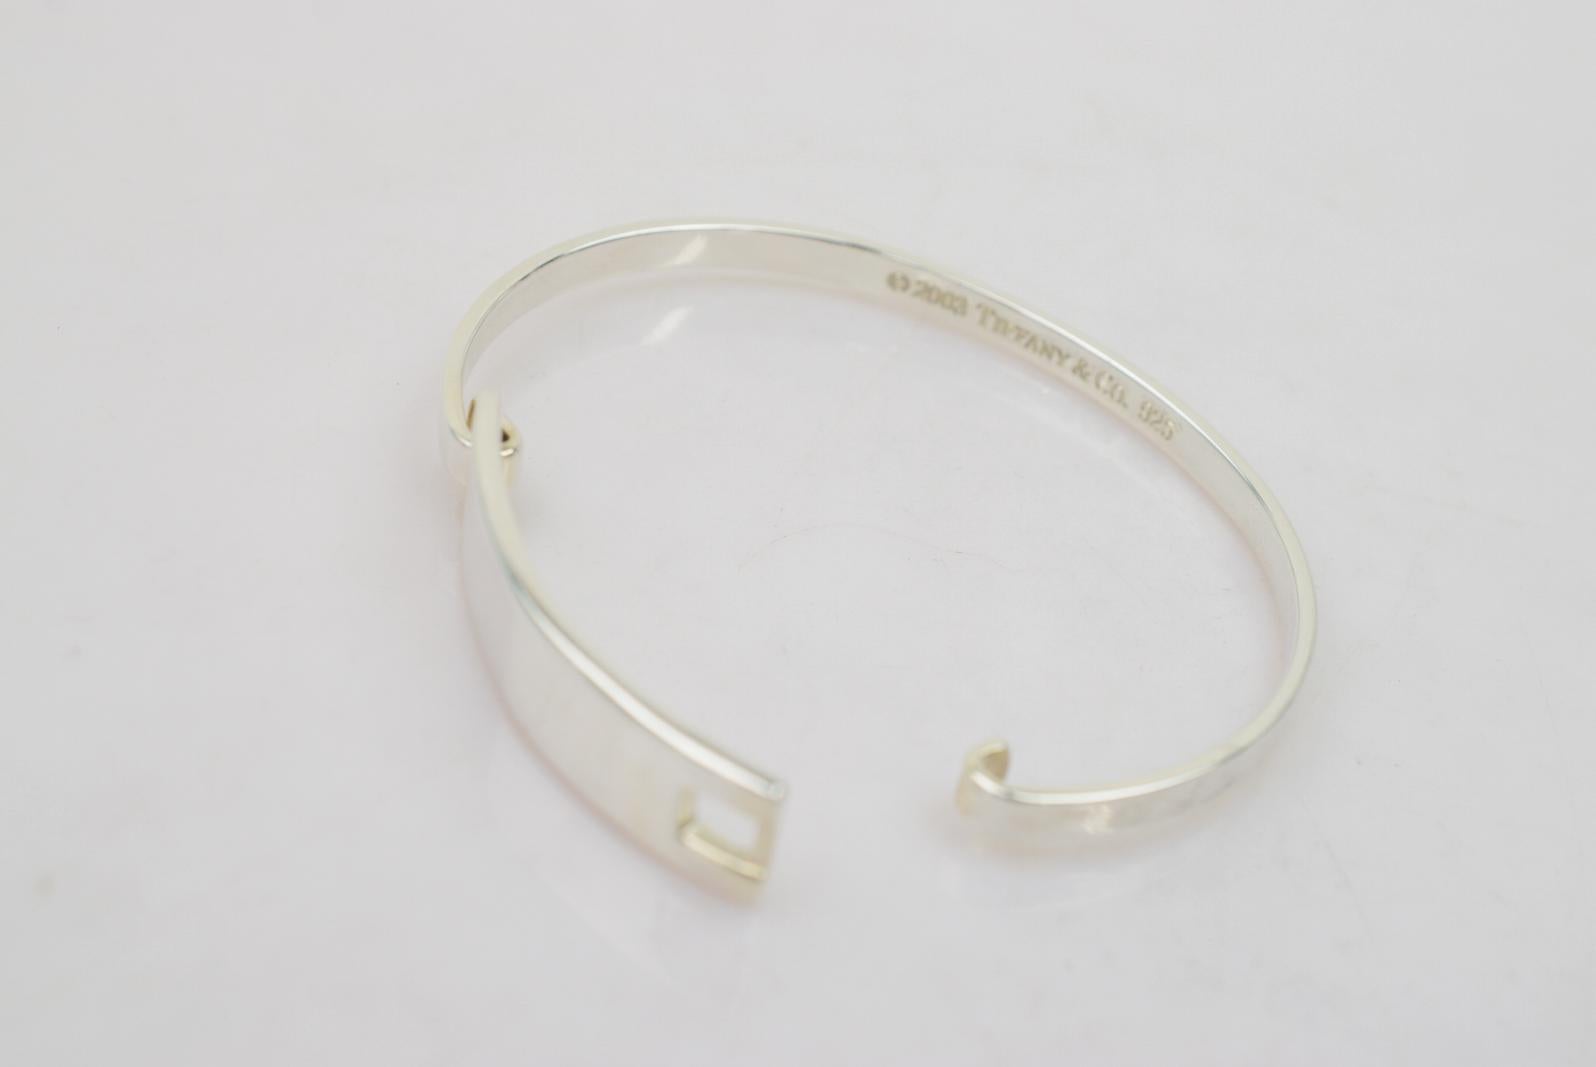 Tiffany & Co. Sterling Silver Hook Cuff Bangle Bracelet in Box

Sterling silver - 925
Hook closure
Inner circumference ~6